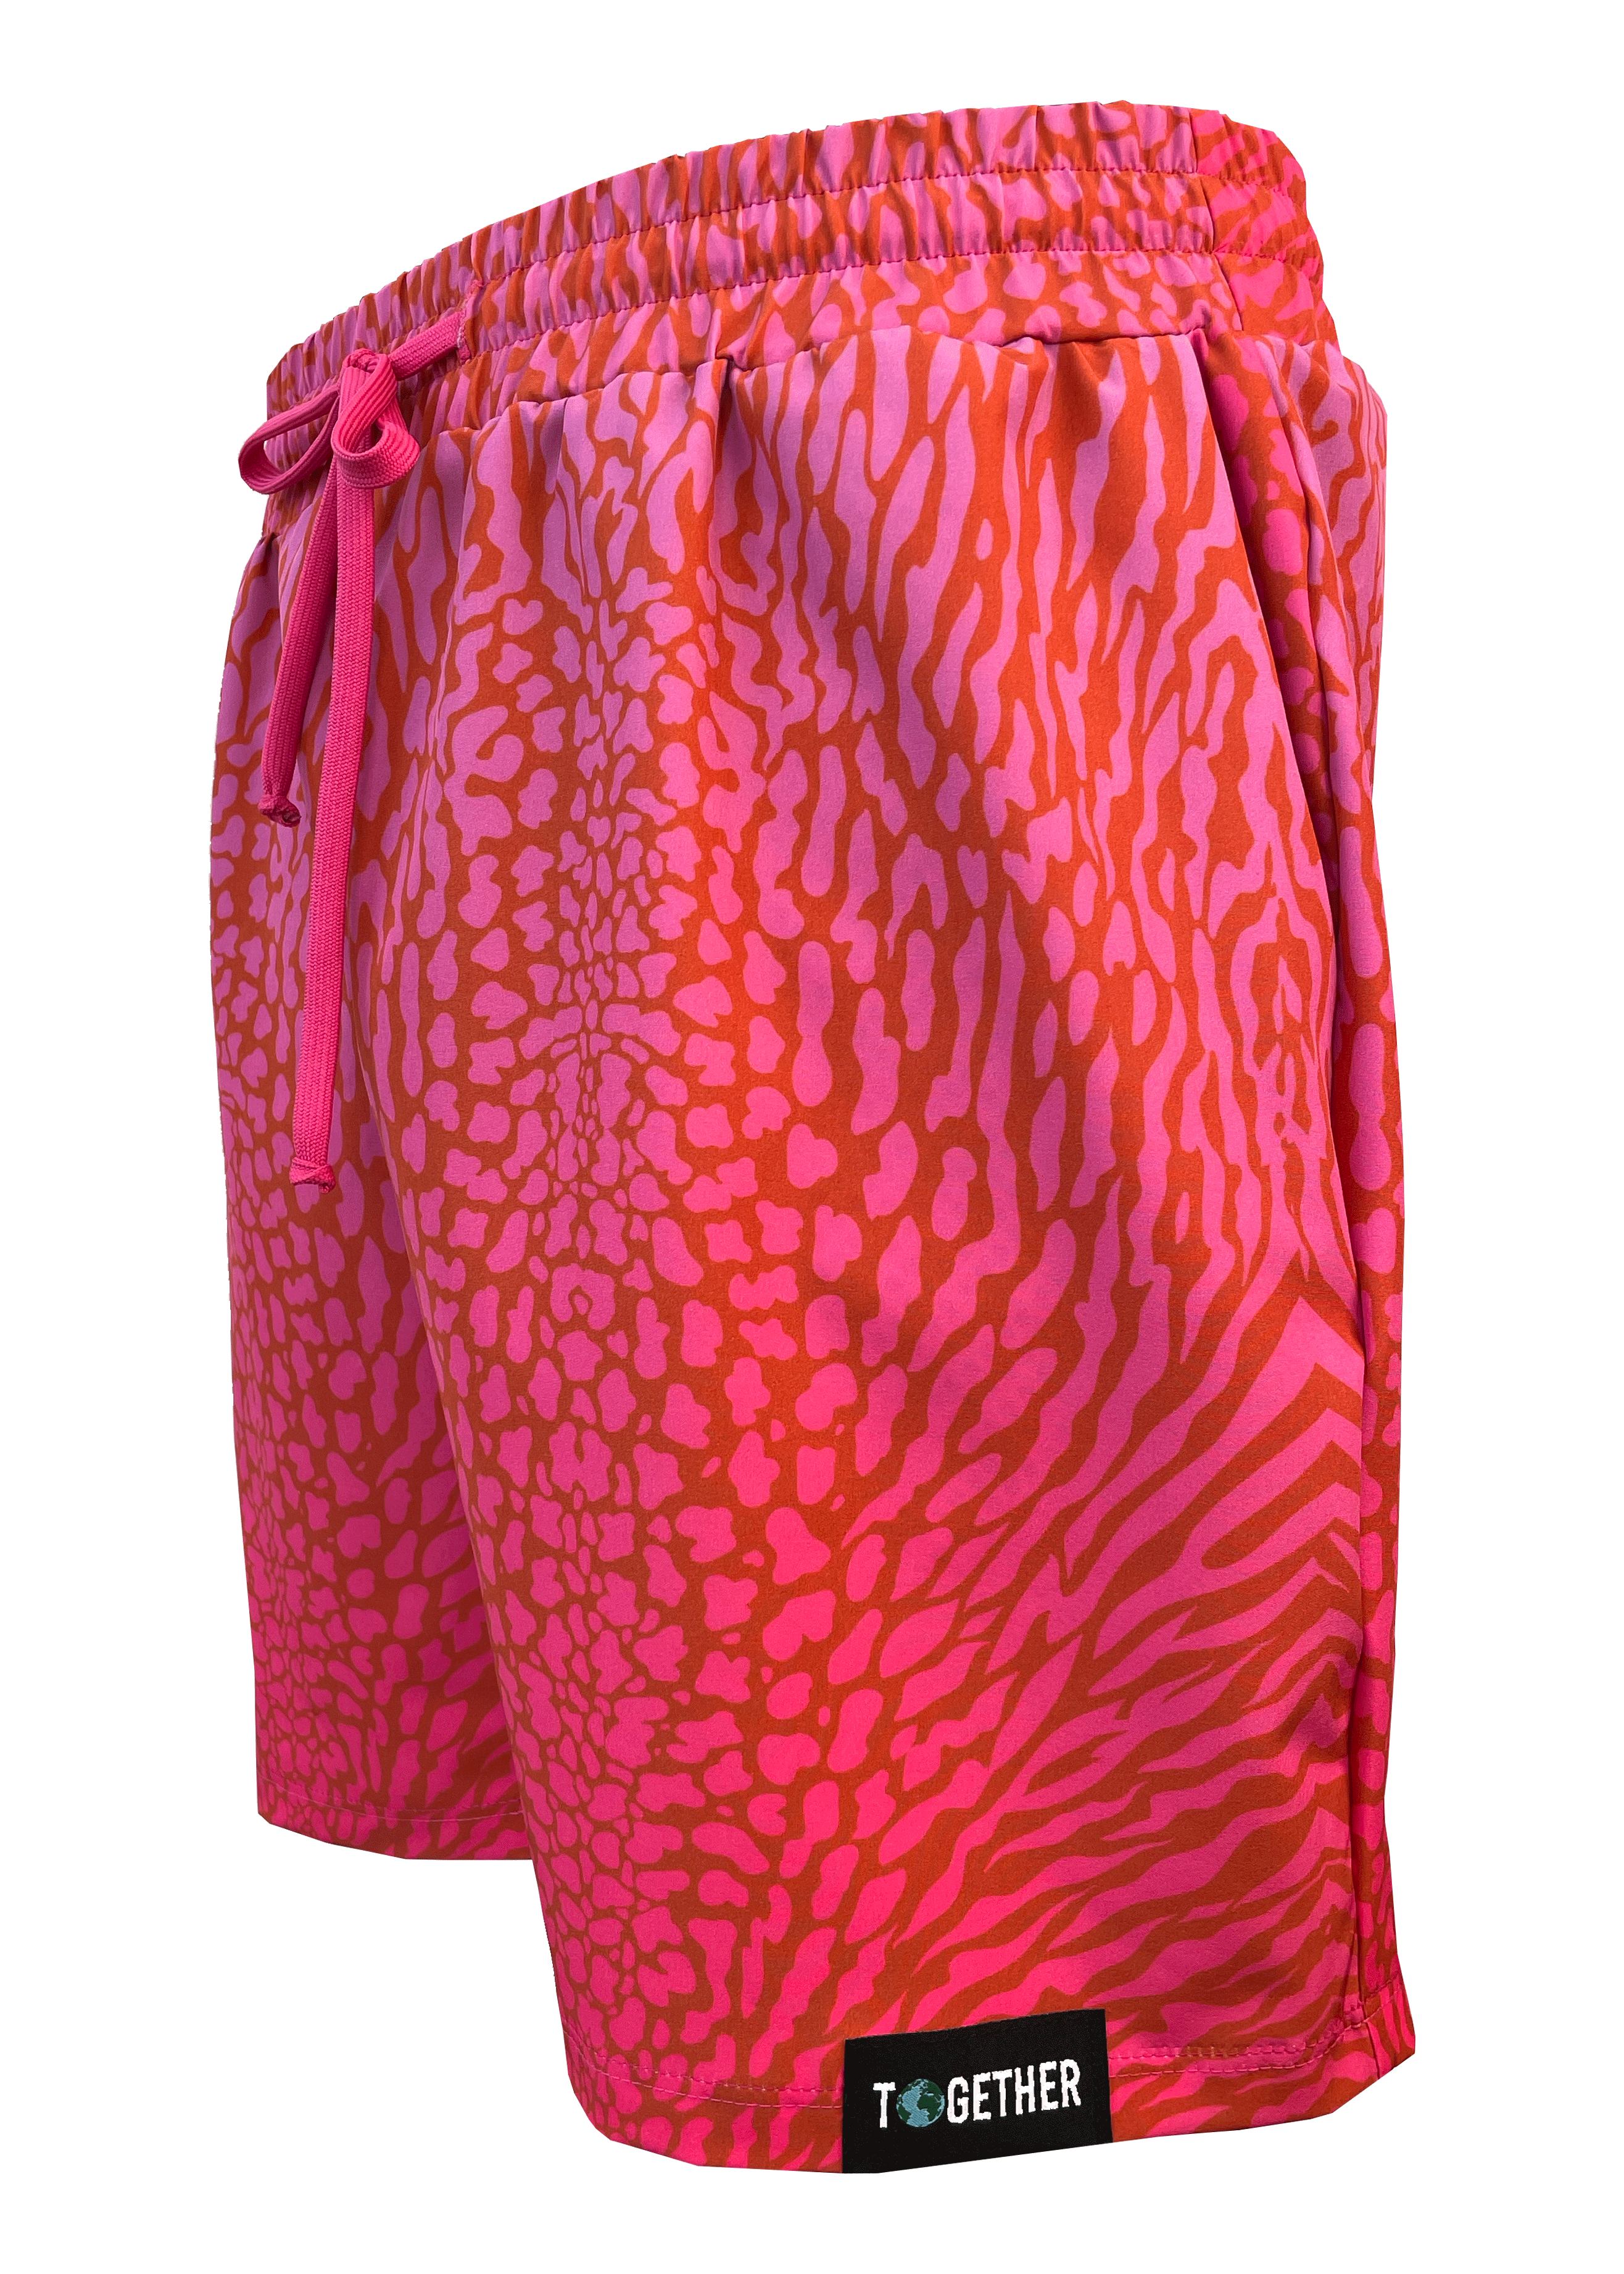 Aquatic Leopard Hybrid Shorts